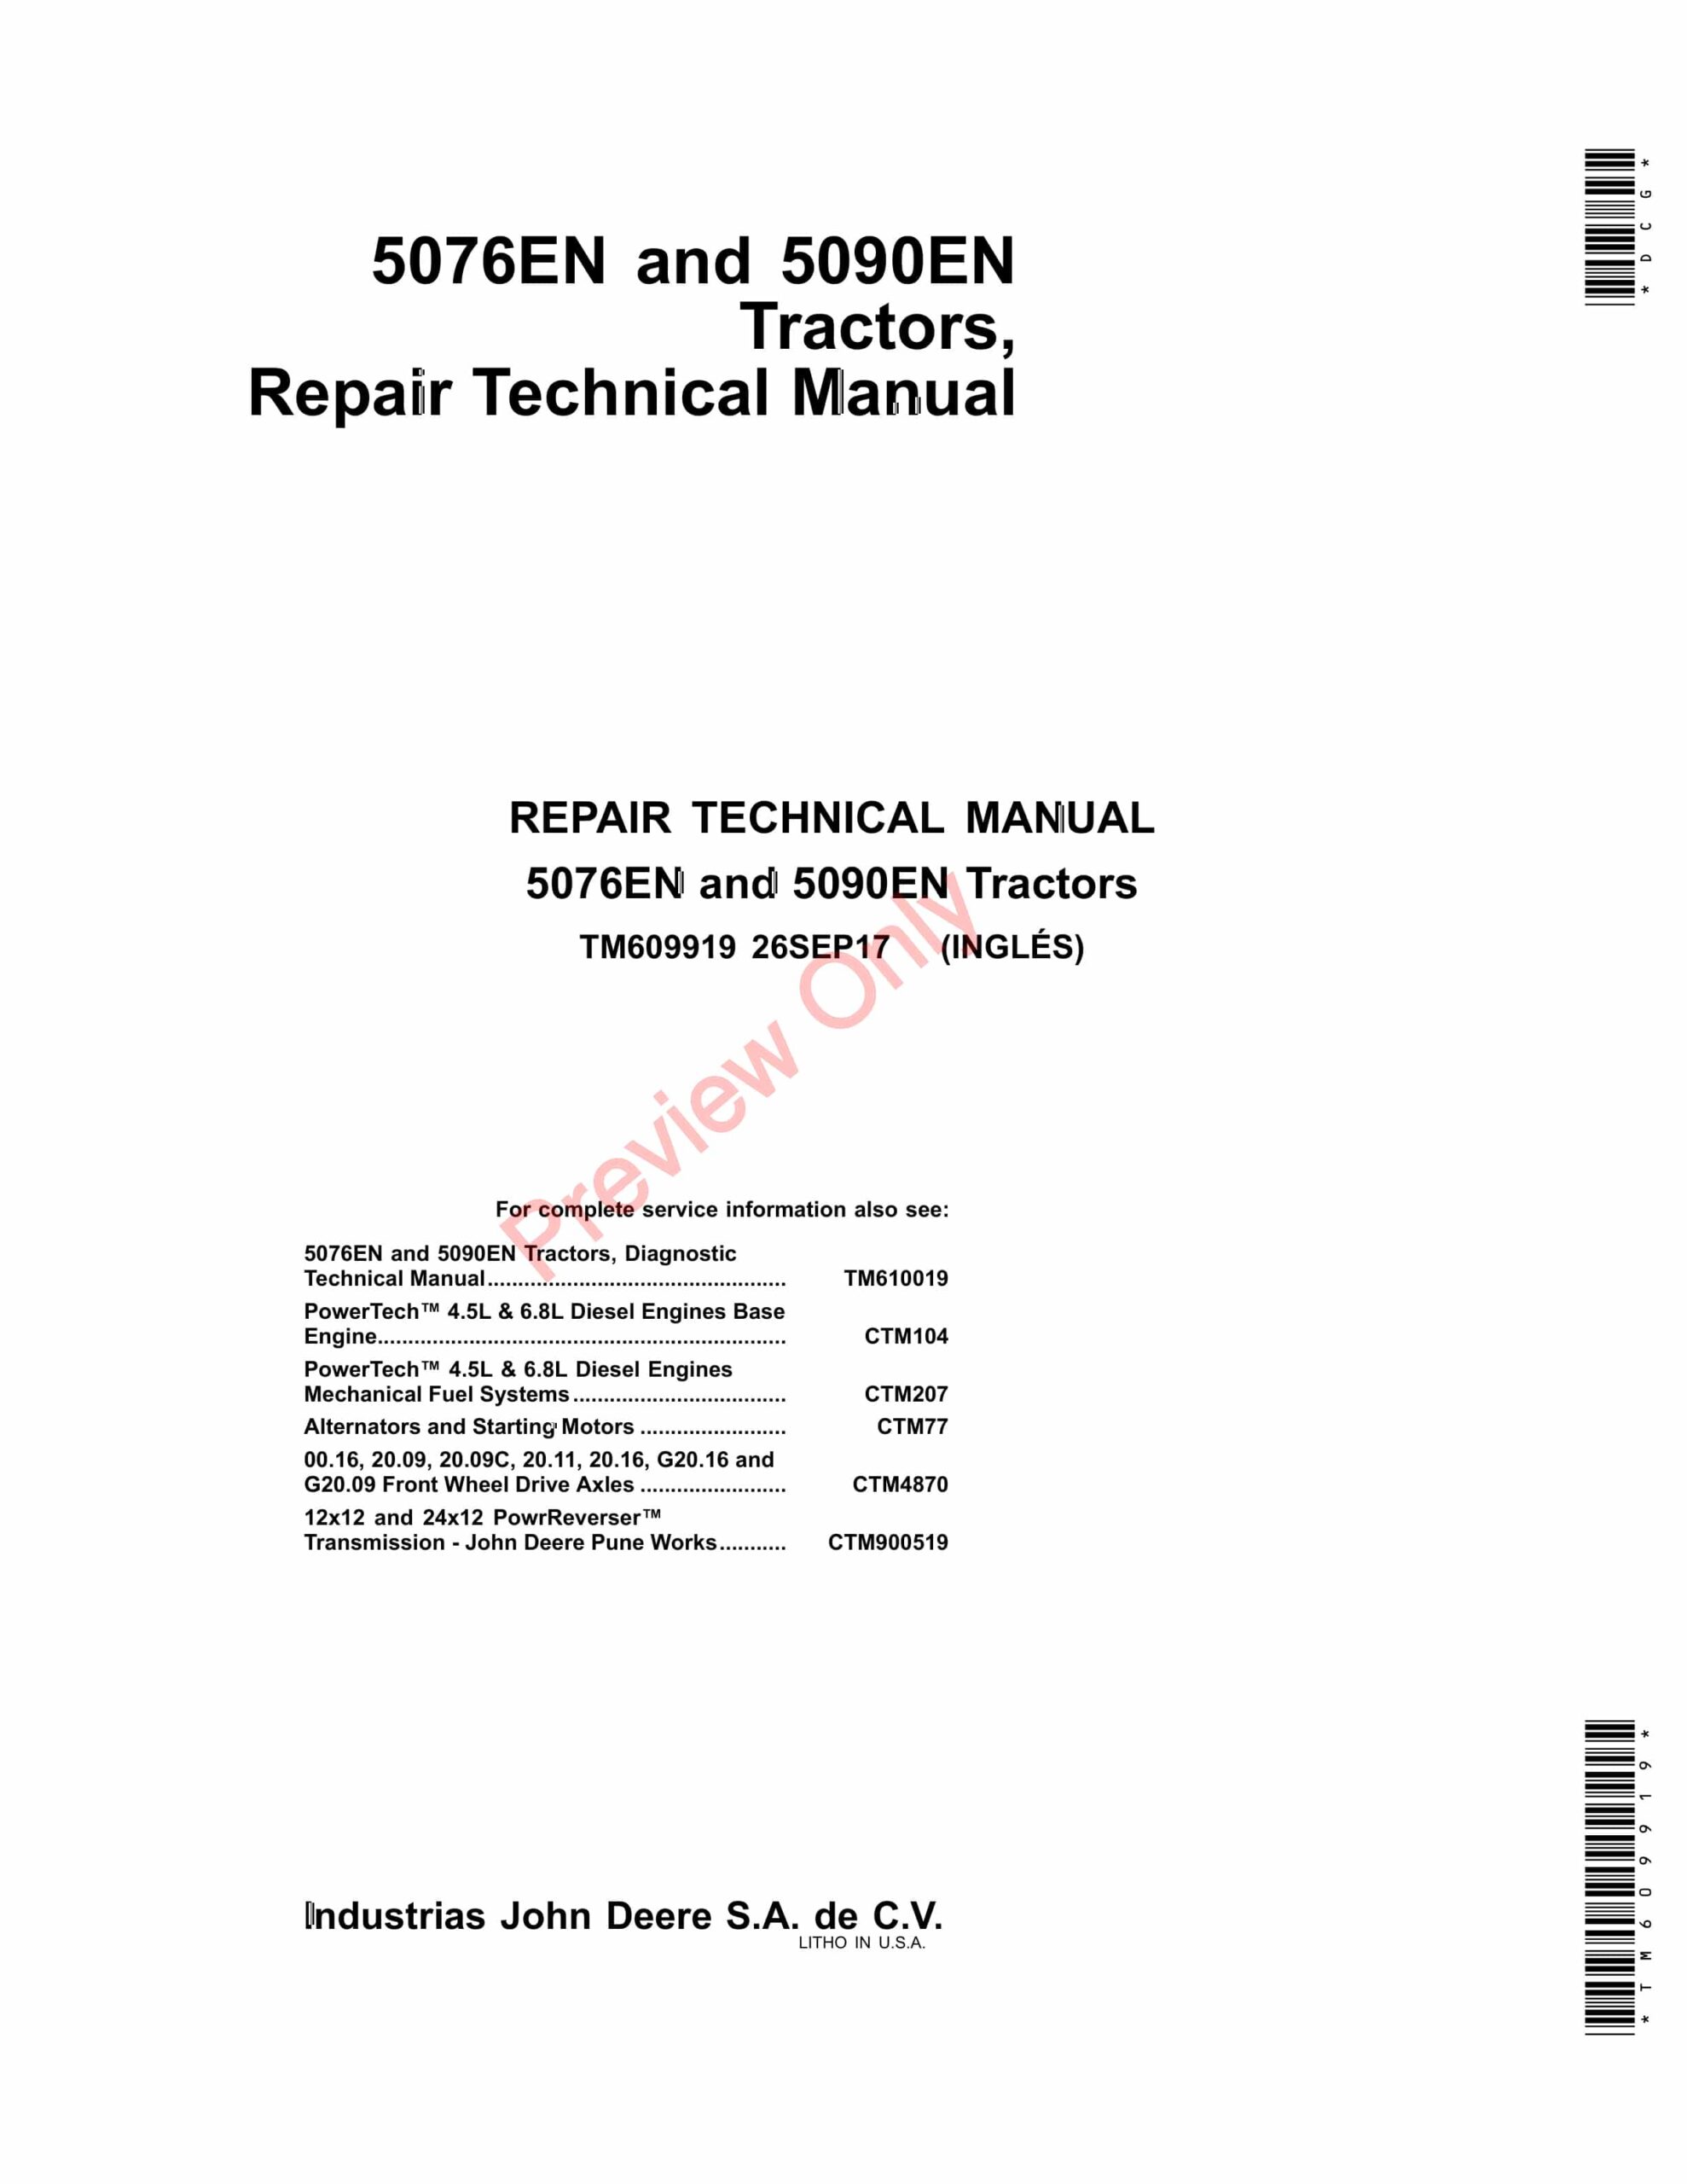 John Deere 5076EN and 5090EN Tractors Repair Technical Manual TM609919 26SEP17-1